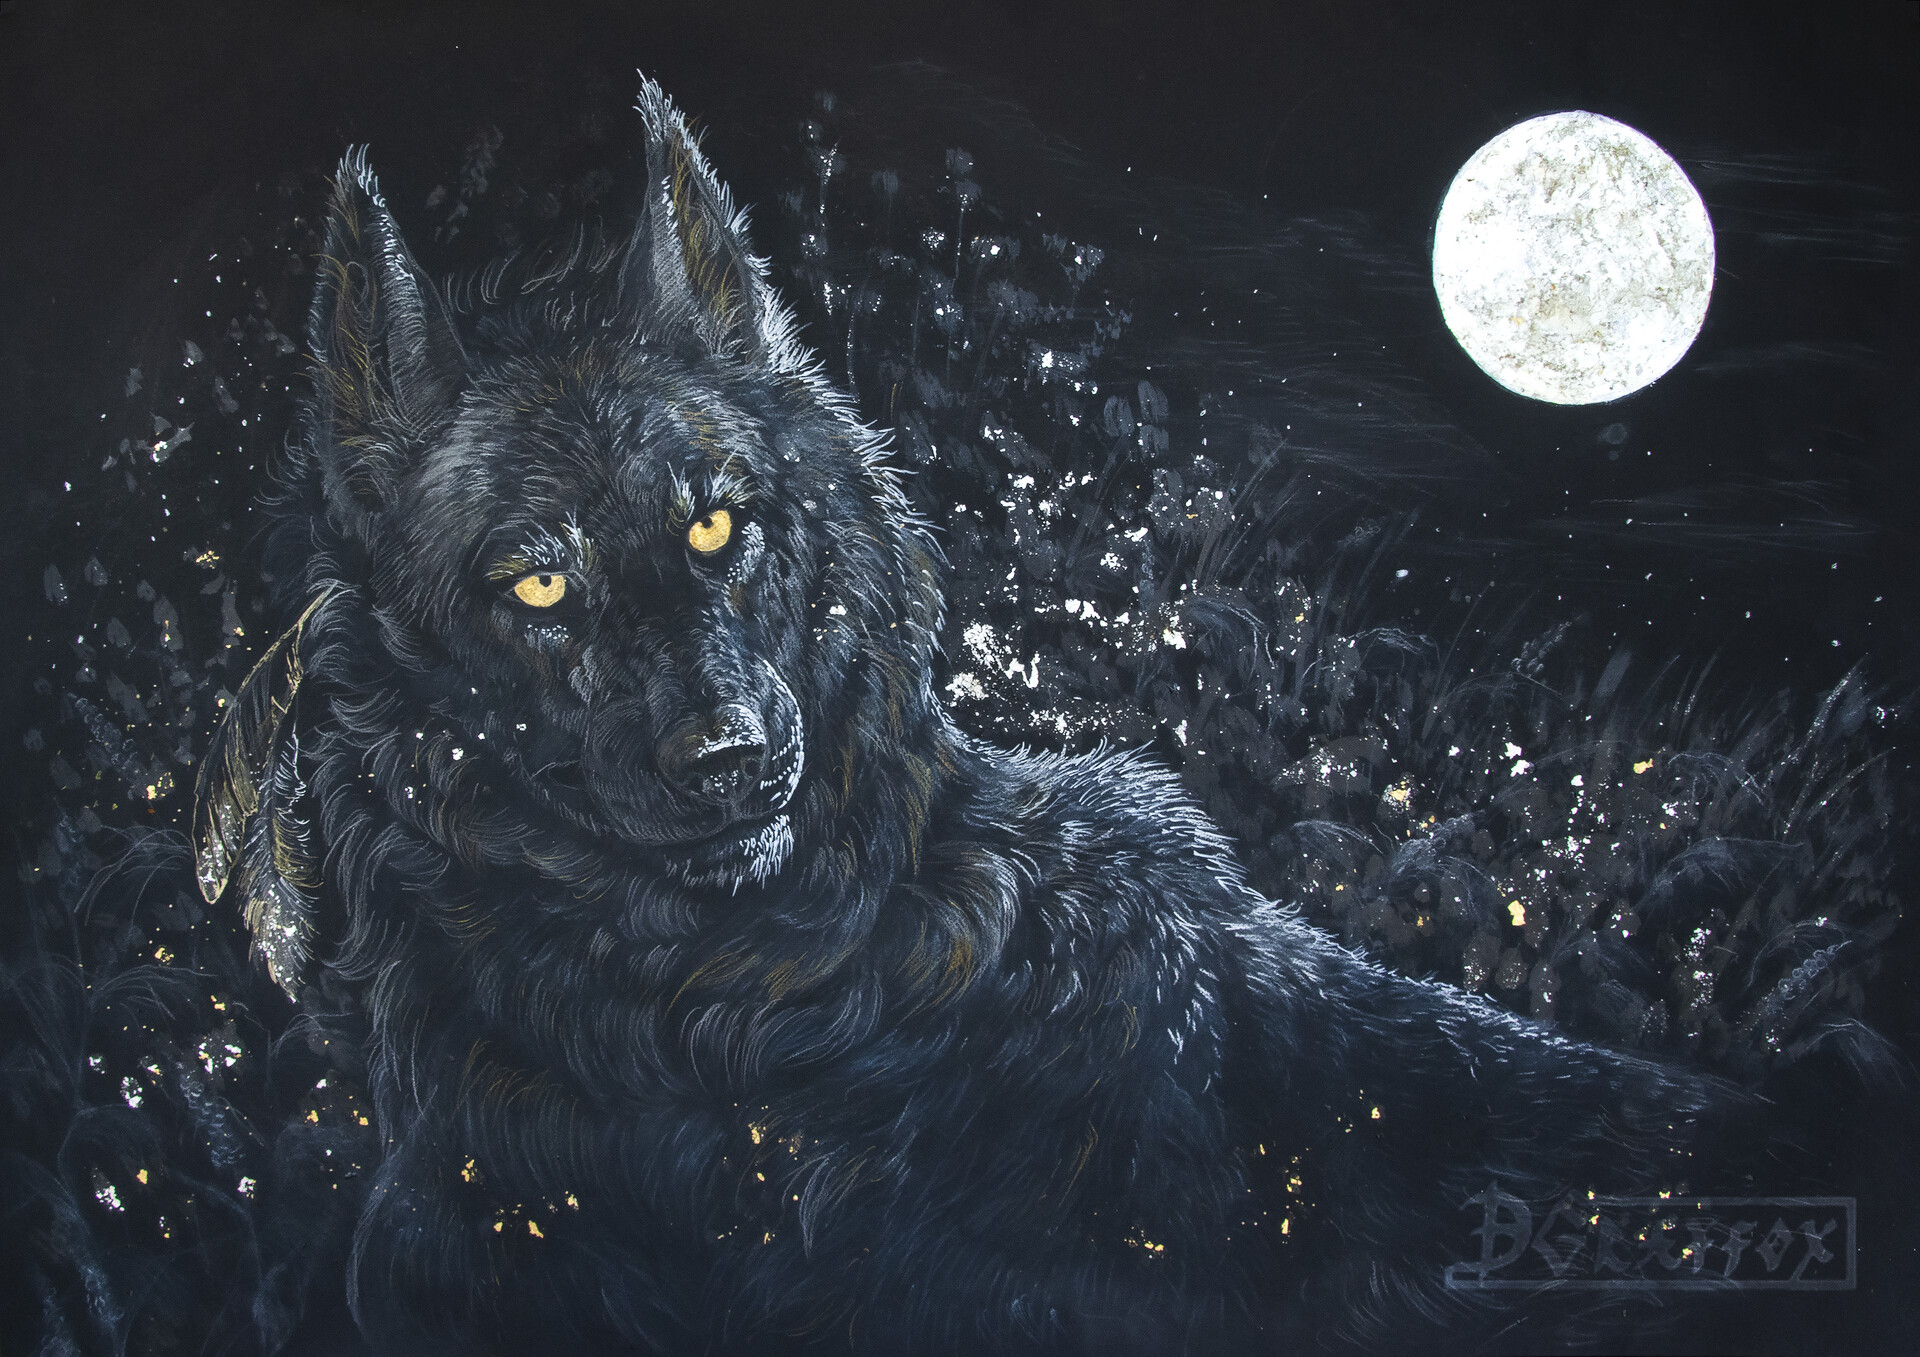 General 1920x1357 Grayfox Windmill fantasy art moonlight wolf dark feathers full moon digital art watermarked